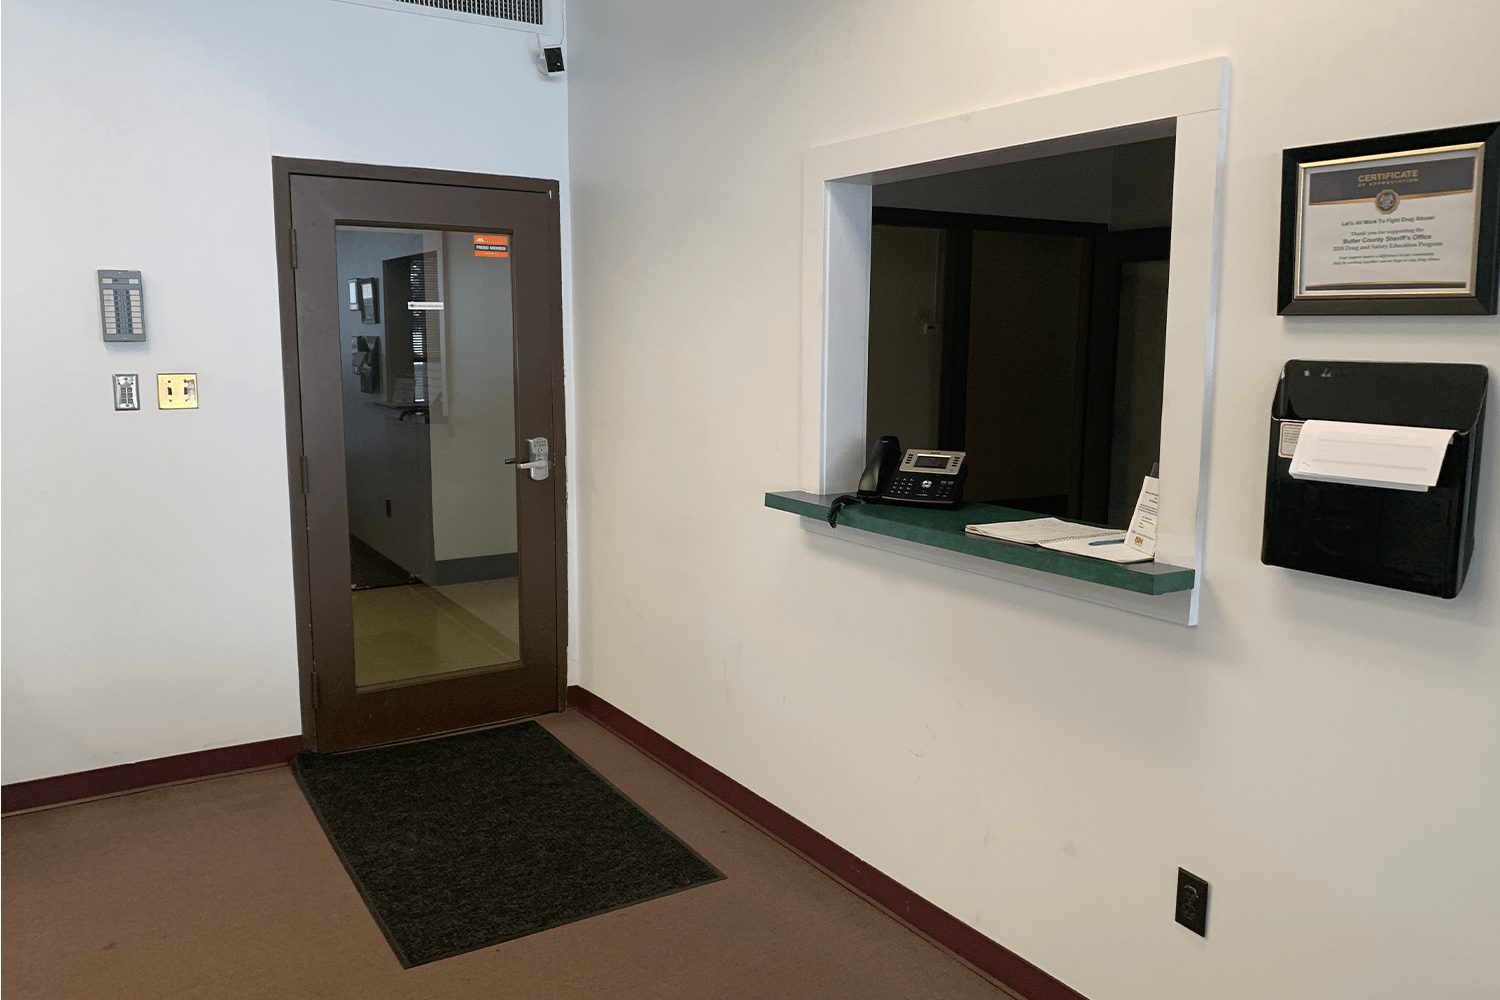 Entrance/reception area with a help desk window